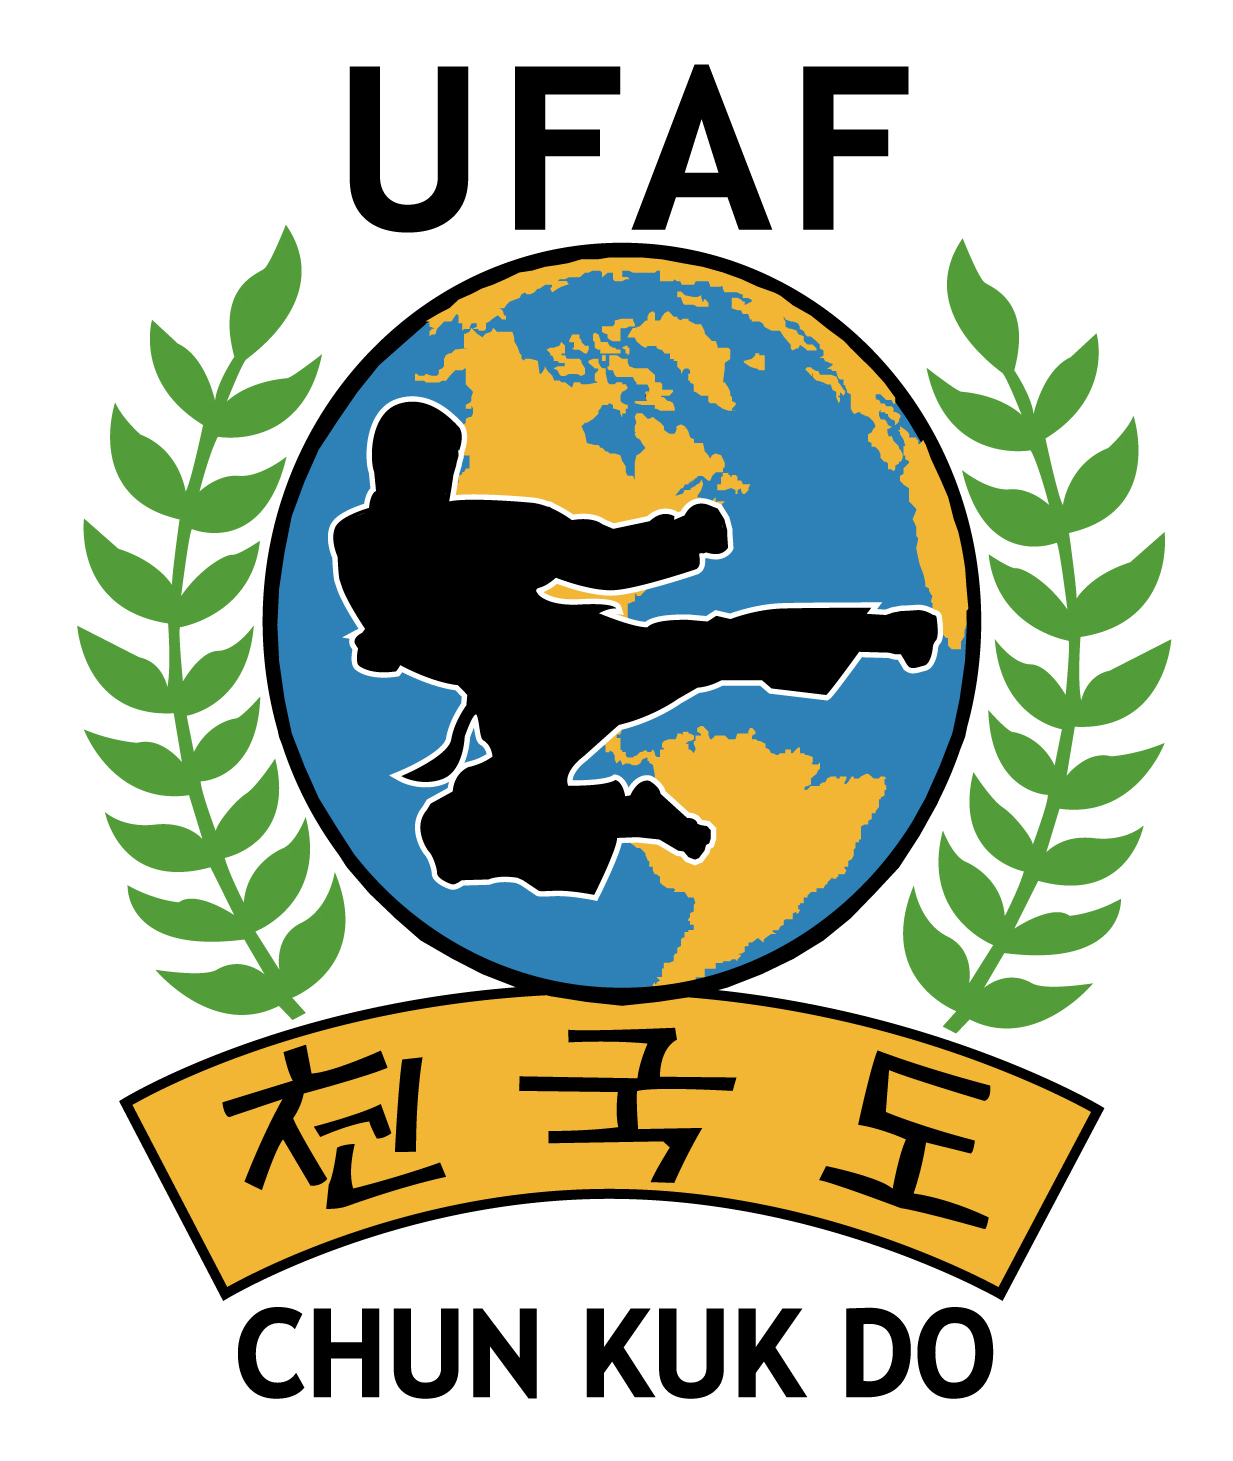 UFAF - Chun Kuk Do Logos, images, and usage guidelines.